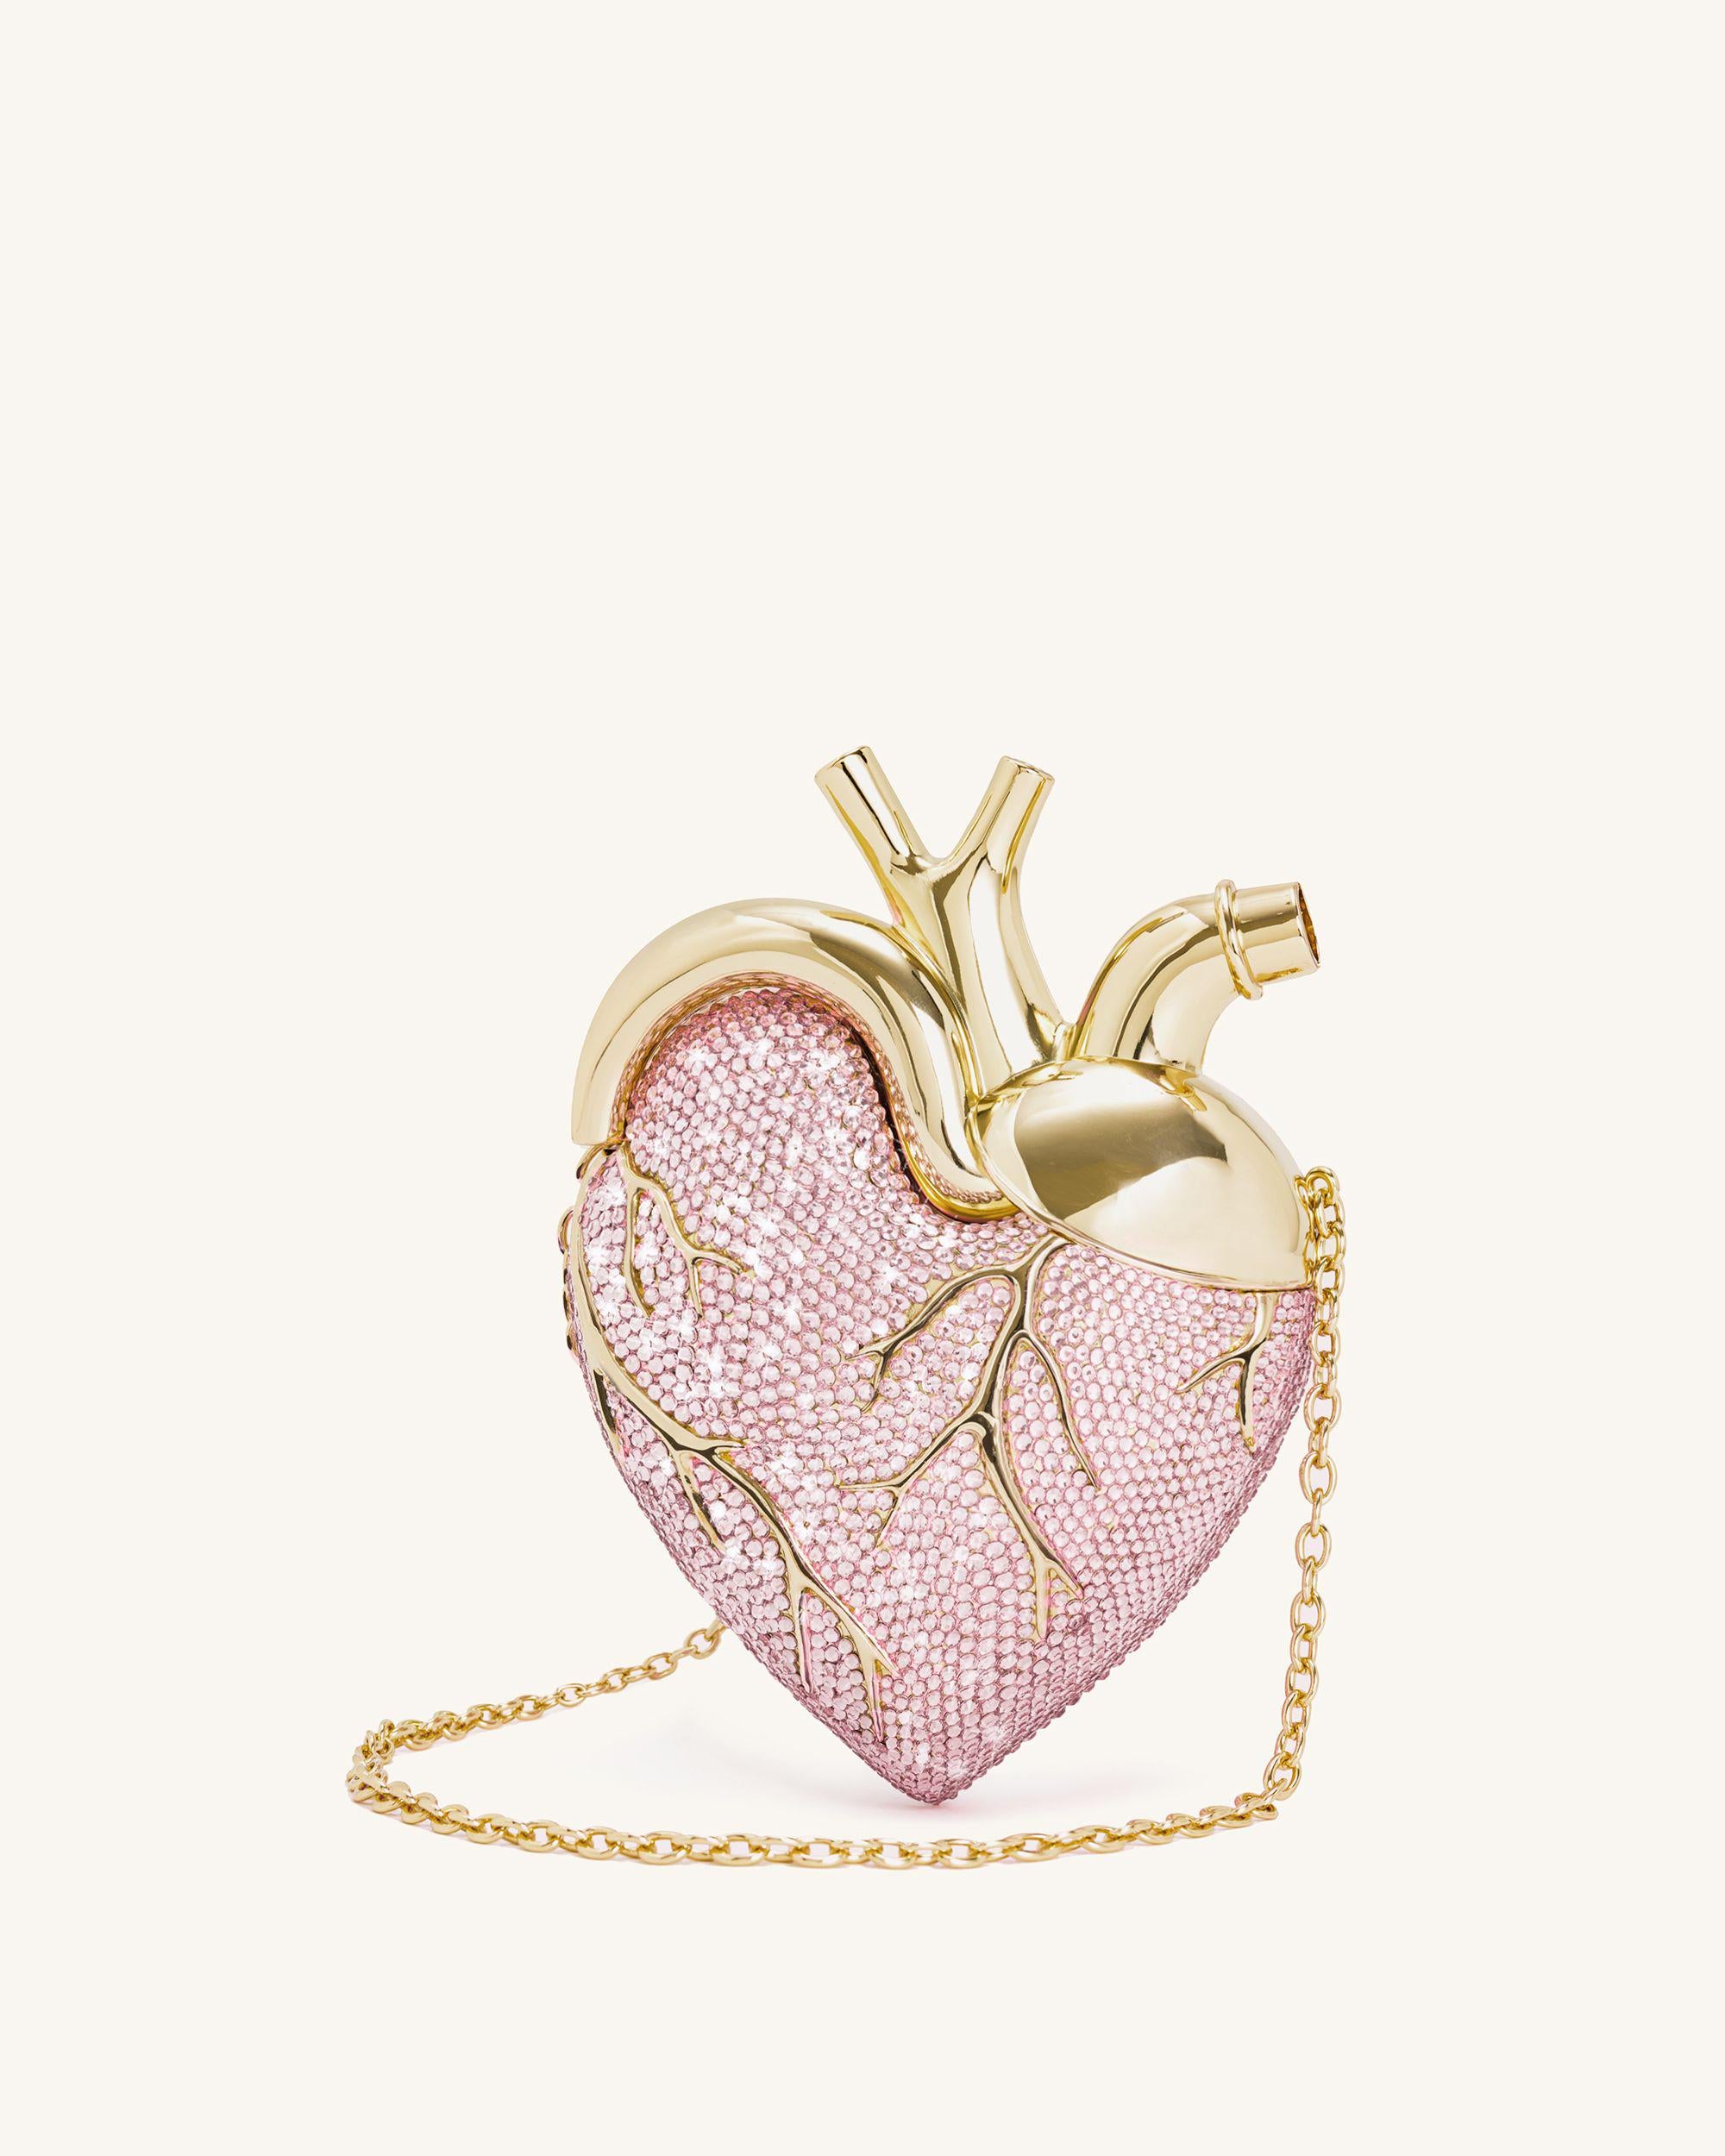 Maren Artificial Crystal Heart Shaped Bag - Pink - JW PEI